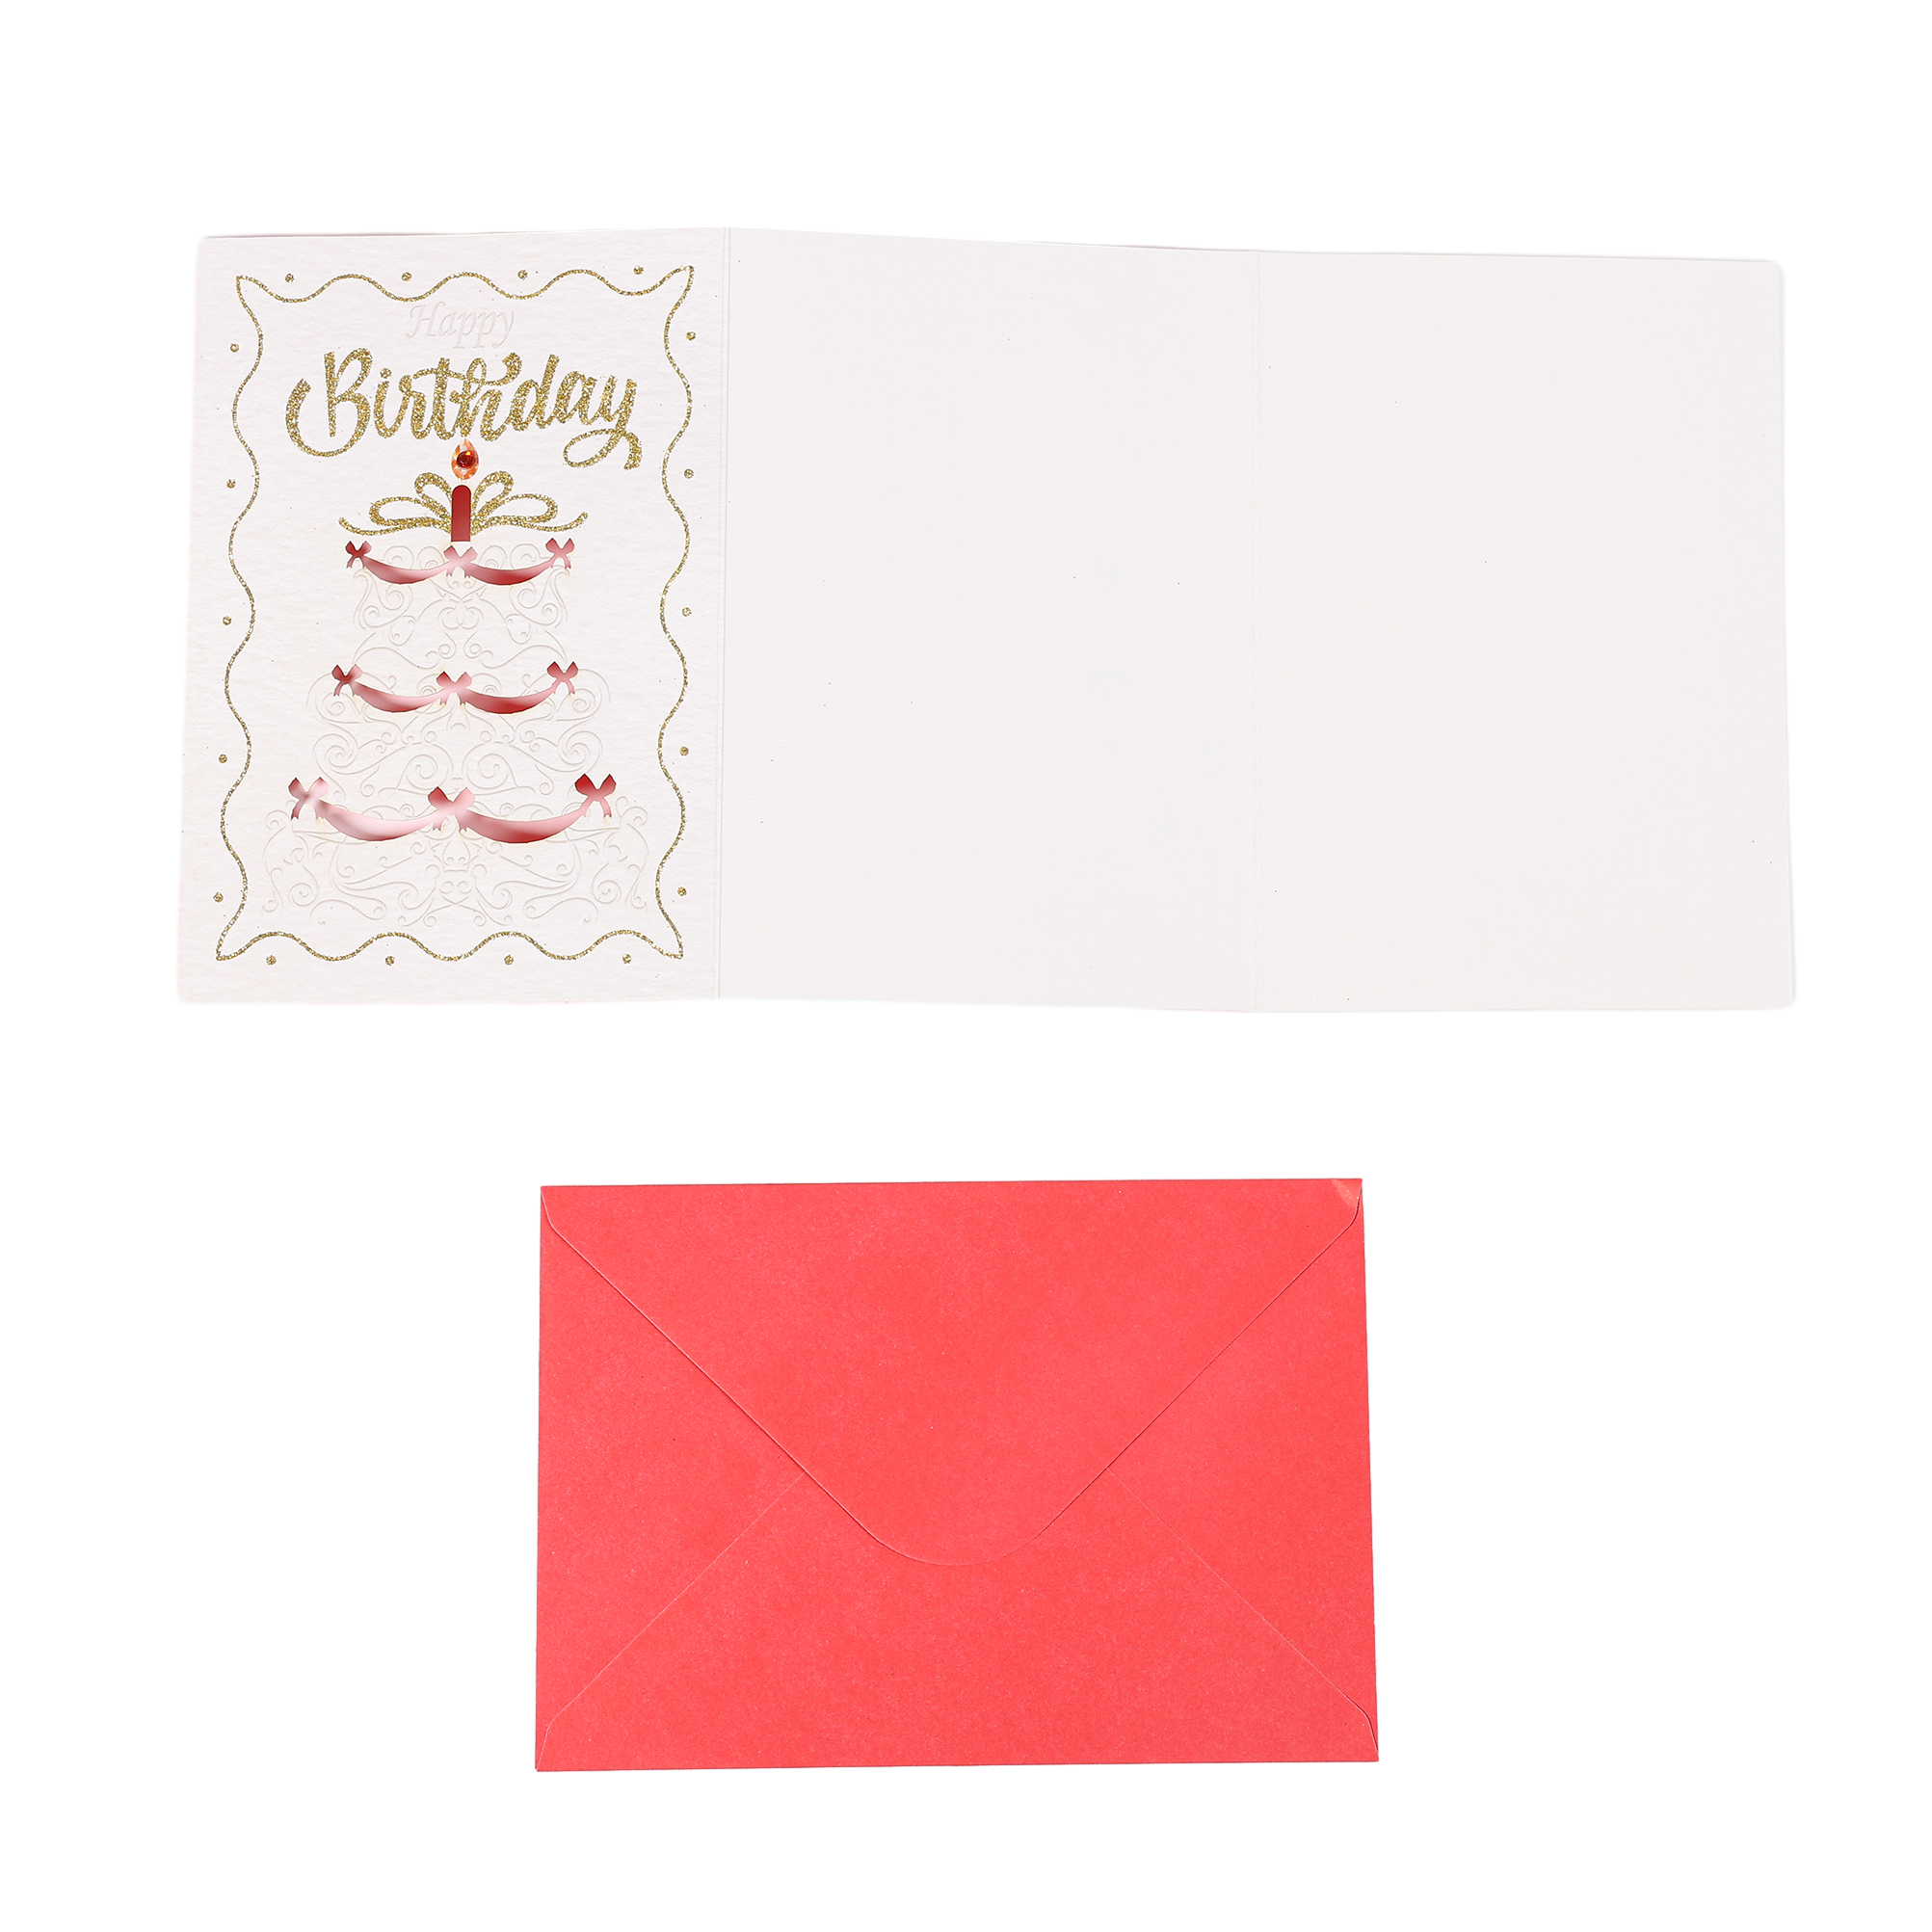 Lace birthday cake greeting card BA013